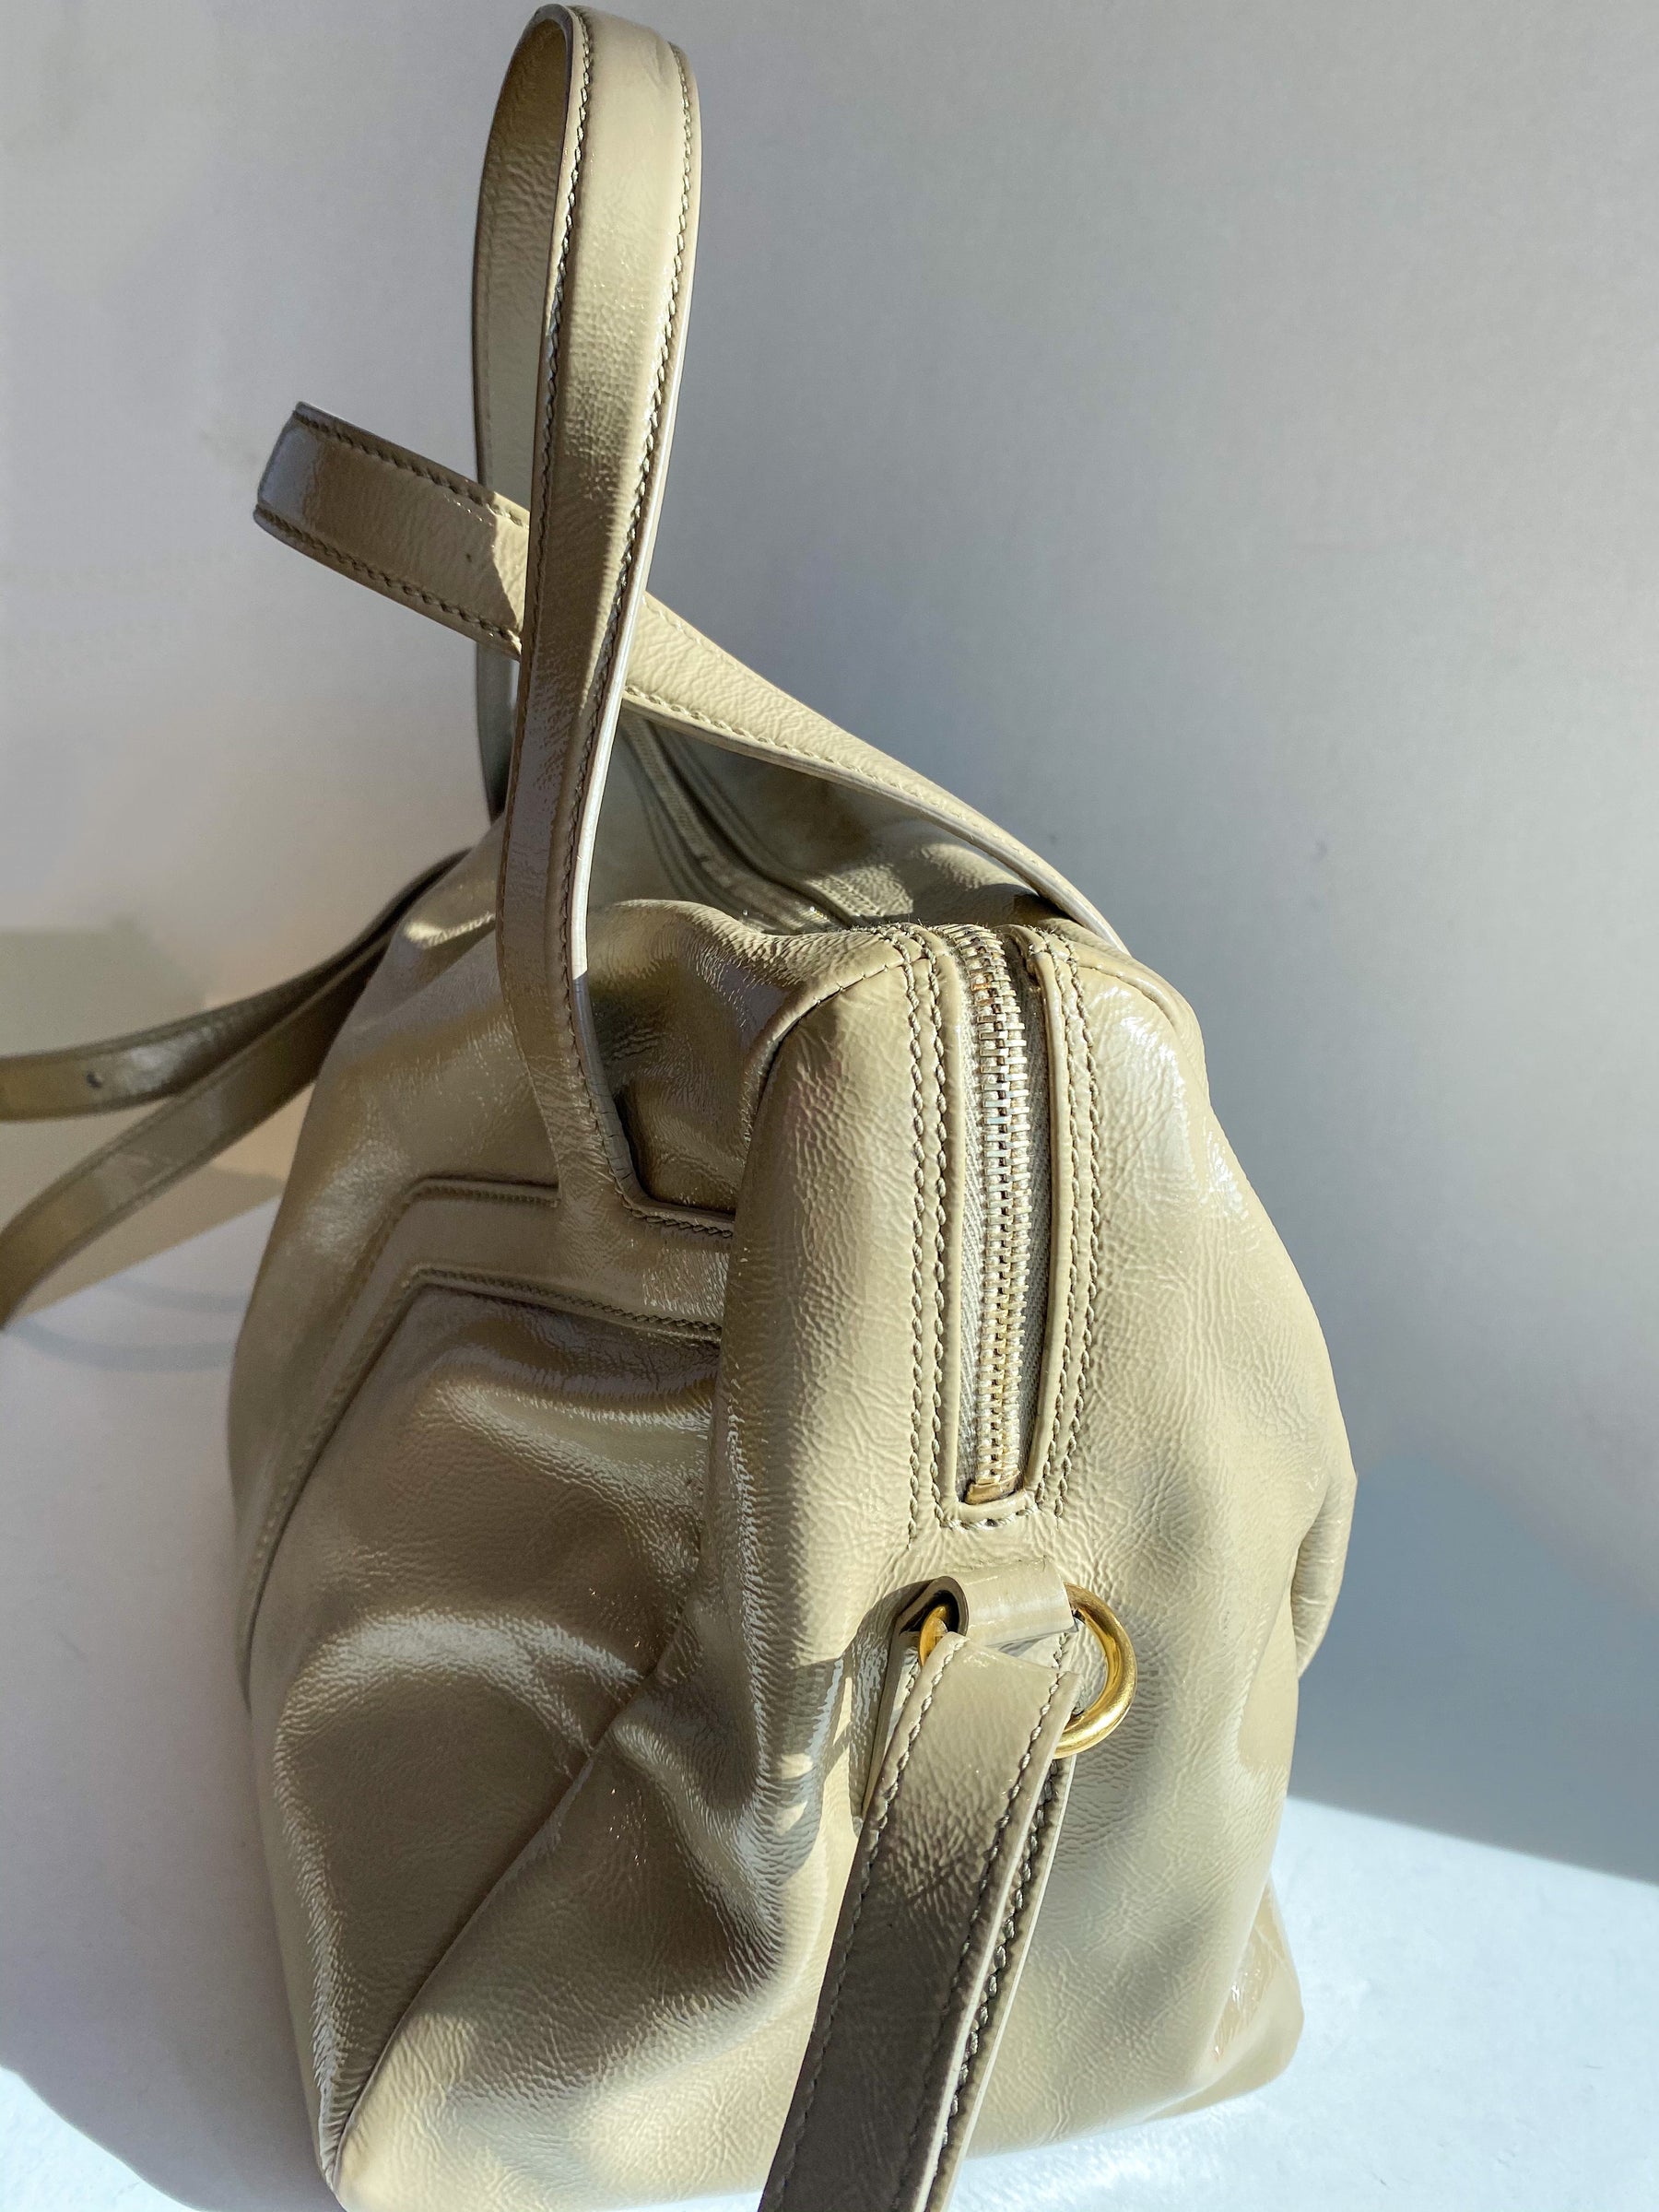 Yves Saint Laurent Patent Leather Bag